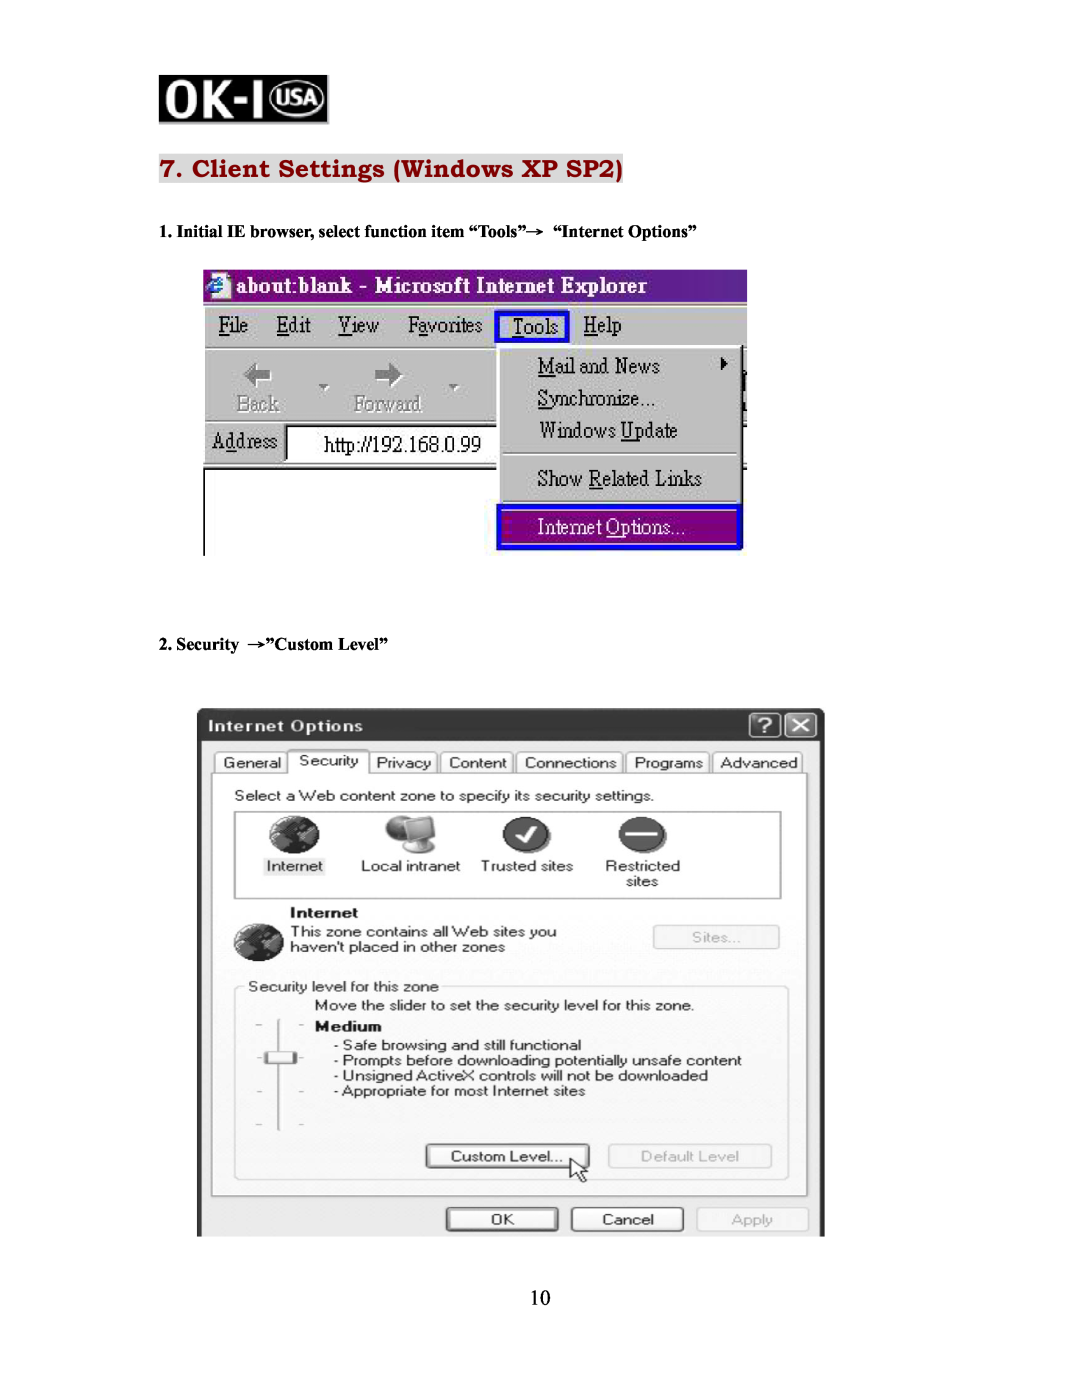 Oki OK-NIP10-A420GP, OK-NIP10-A420P user manual Client Settings Windows XP SP2, “Internet Options”, Security ”Custom Level” 